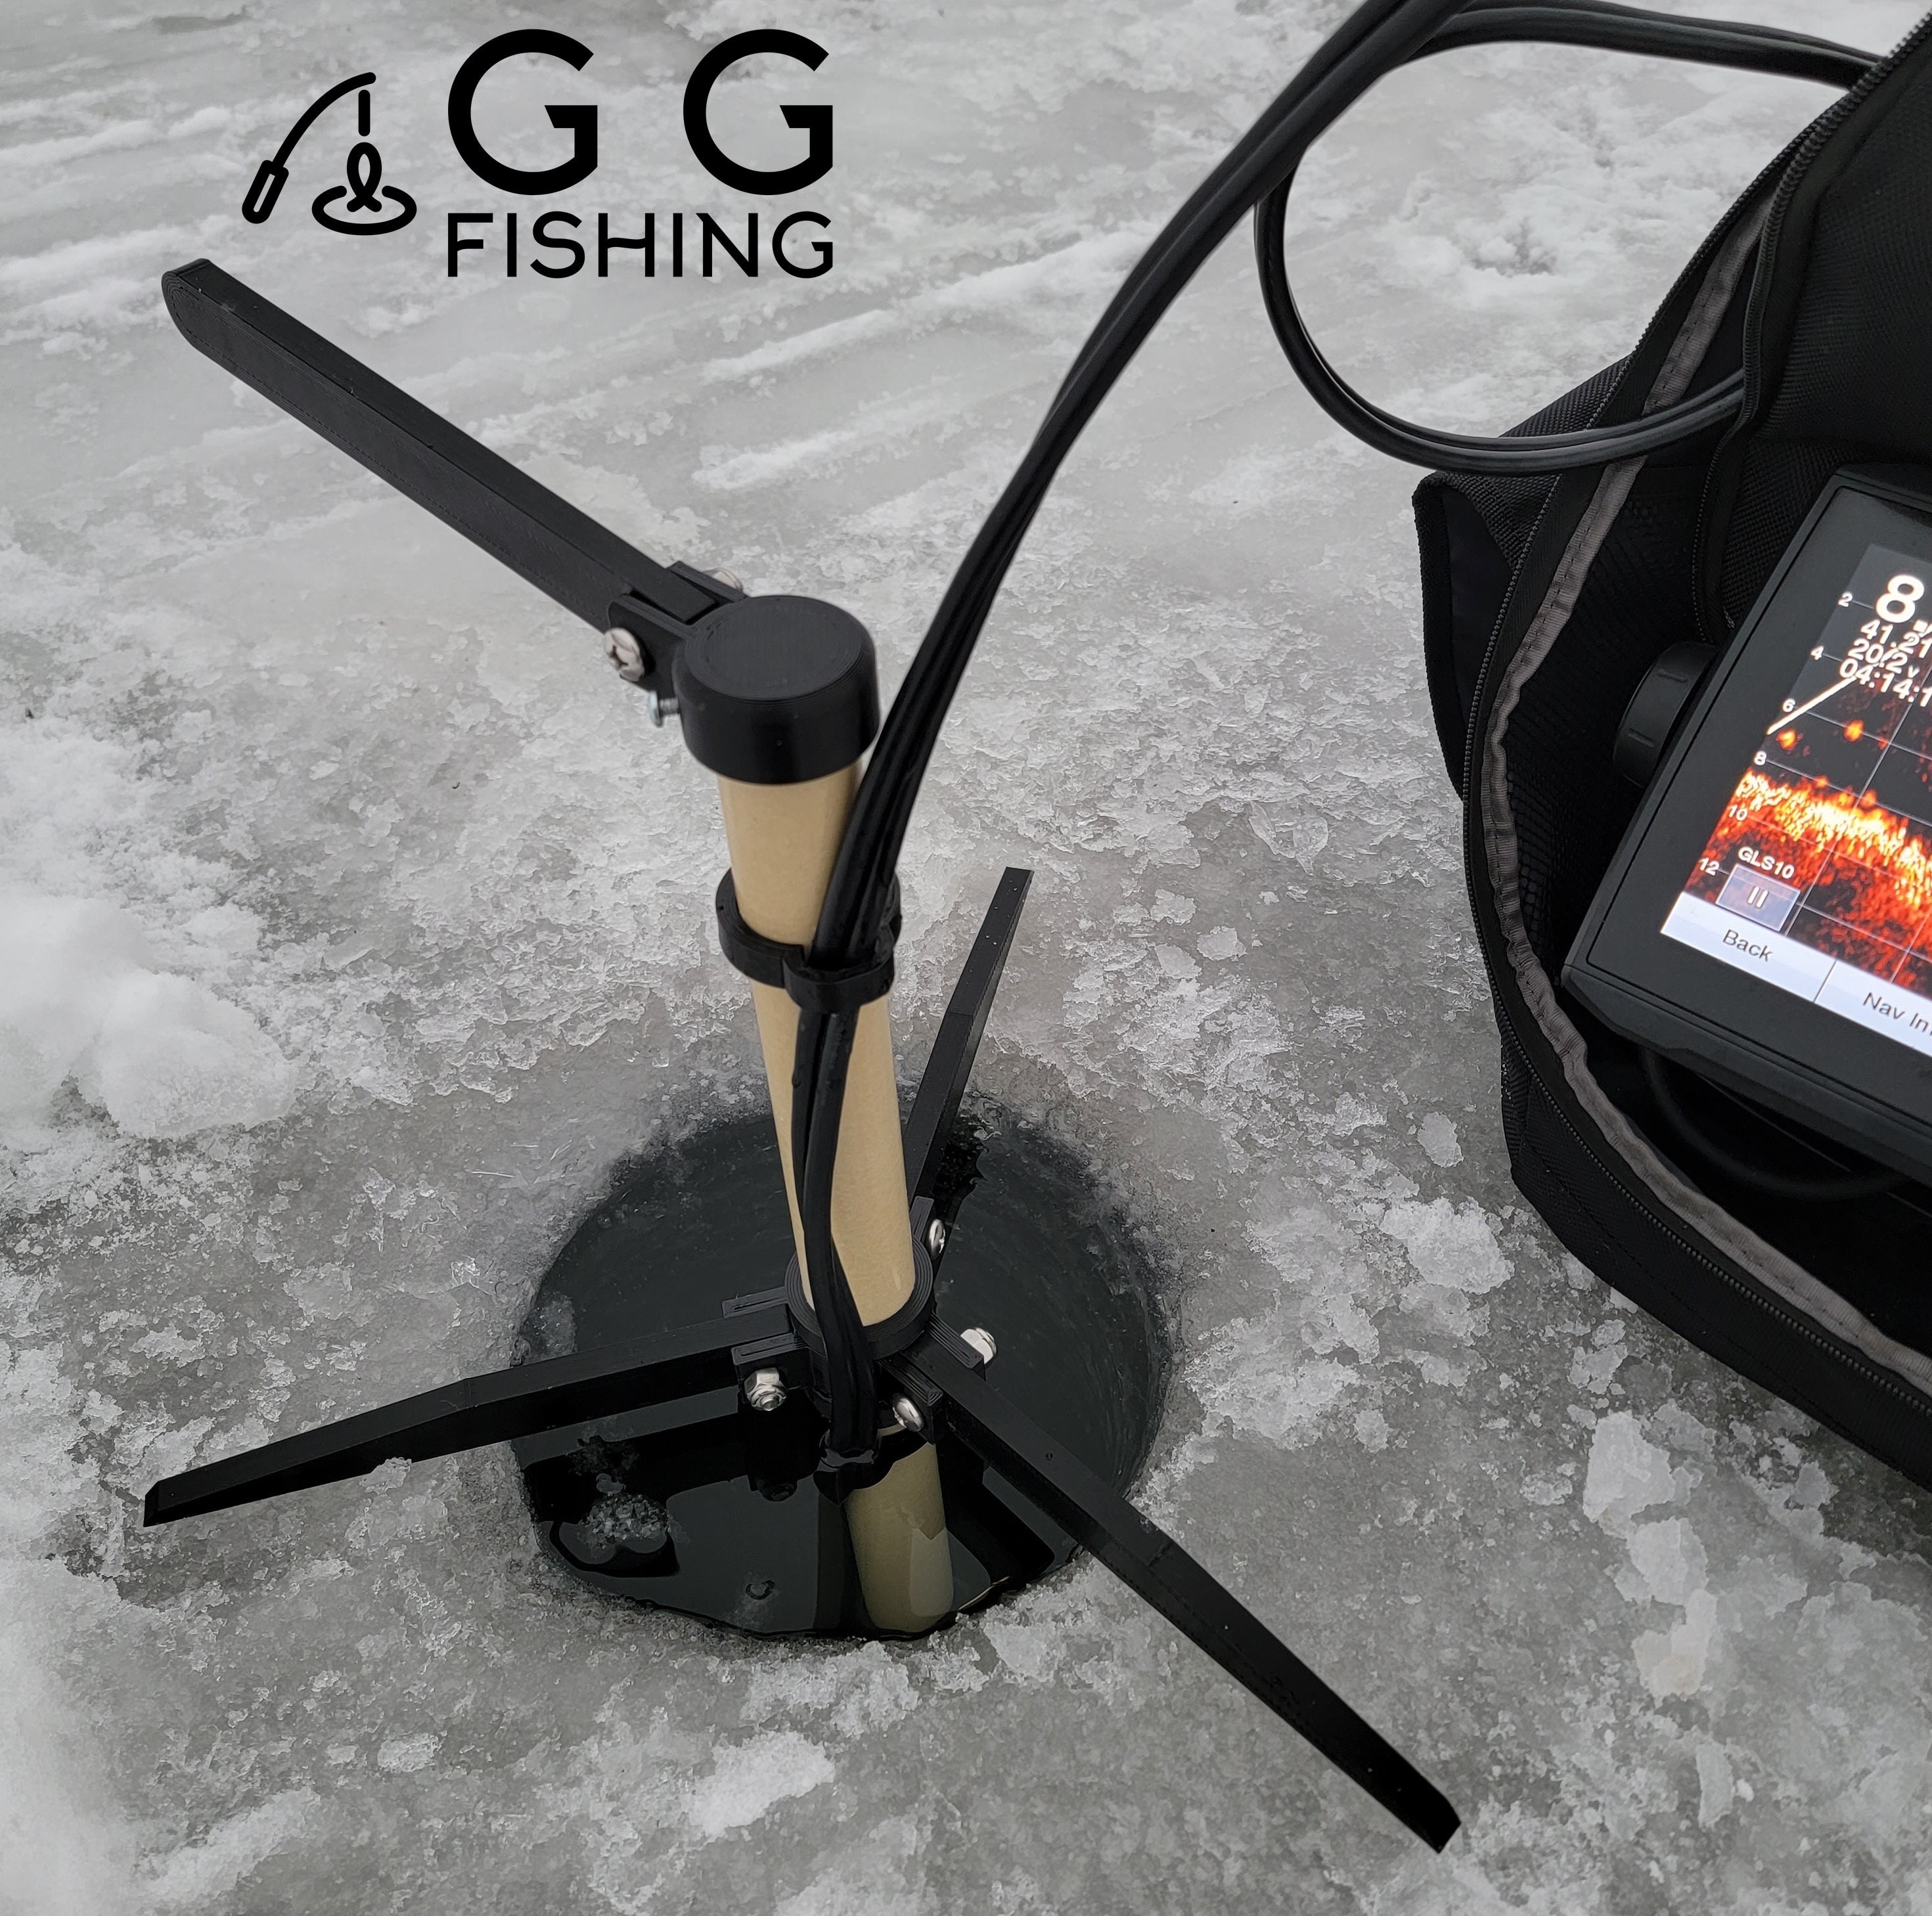 Ggfishing Ice Fishing Mount Kit for Livescope, Active Target, MEGA